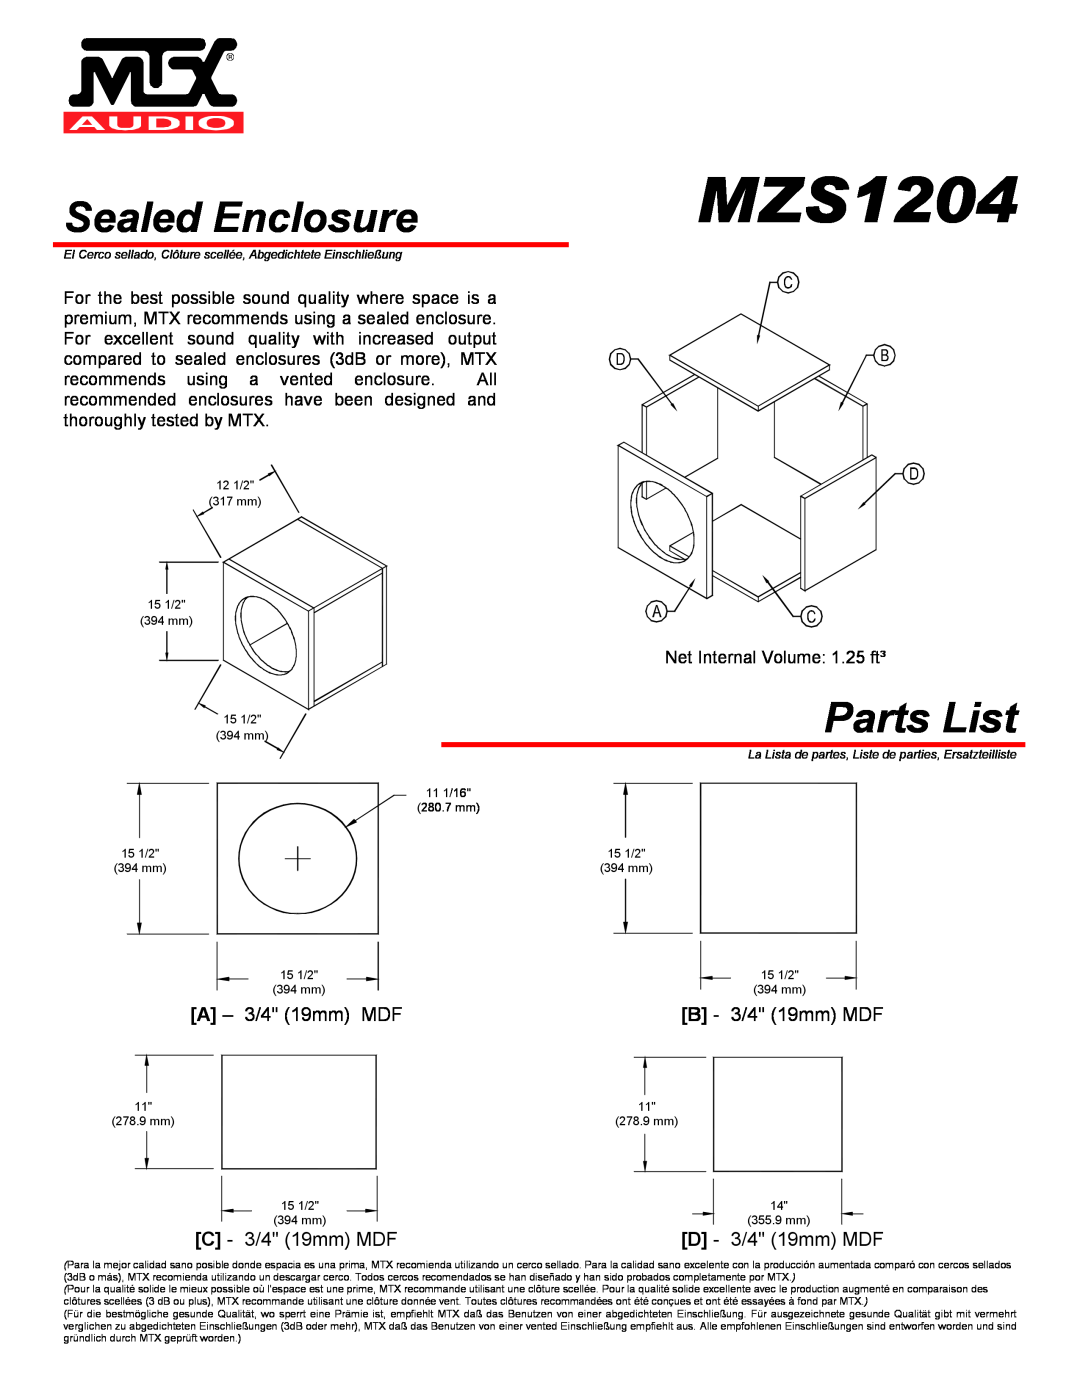 MTX Audio MZS1204 Sealed Enclosure, Parts List, A - 3/4 19mm MDF, B - 3/4 19mm MDF, C - 3/4 19mm MDF, D - 3/4 19mm MDF 